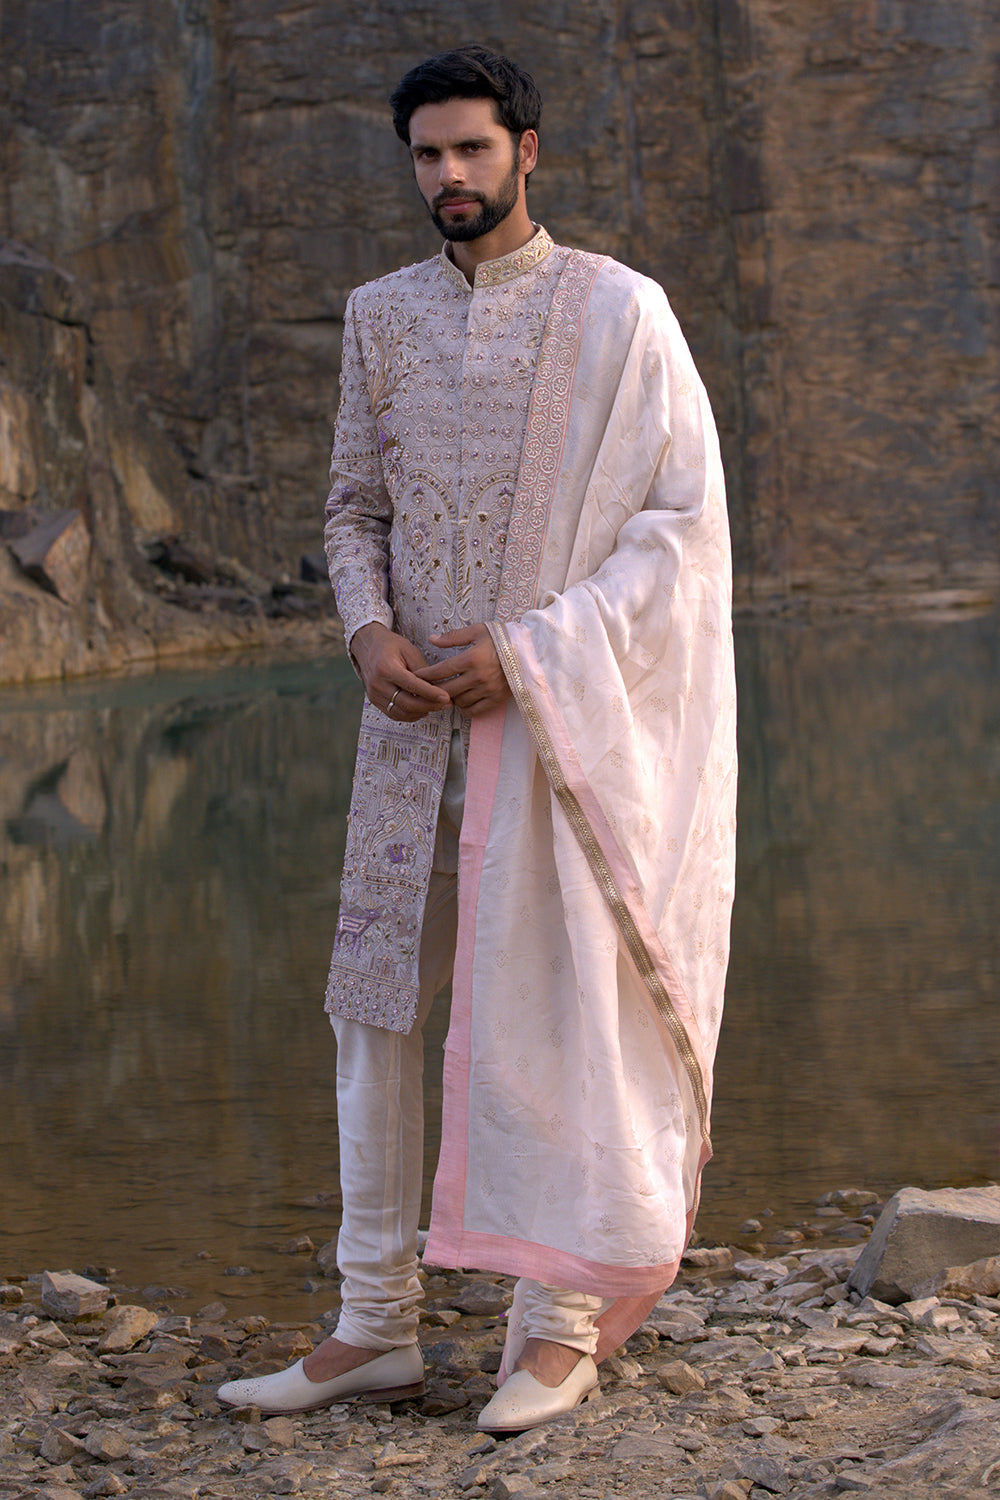 Beige Coloured Sherwani With Accessories